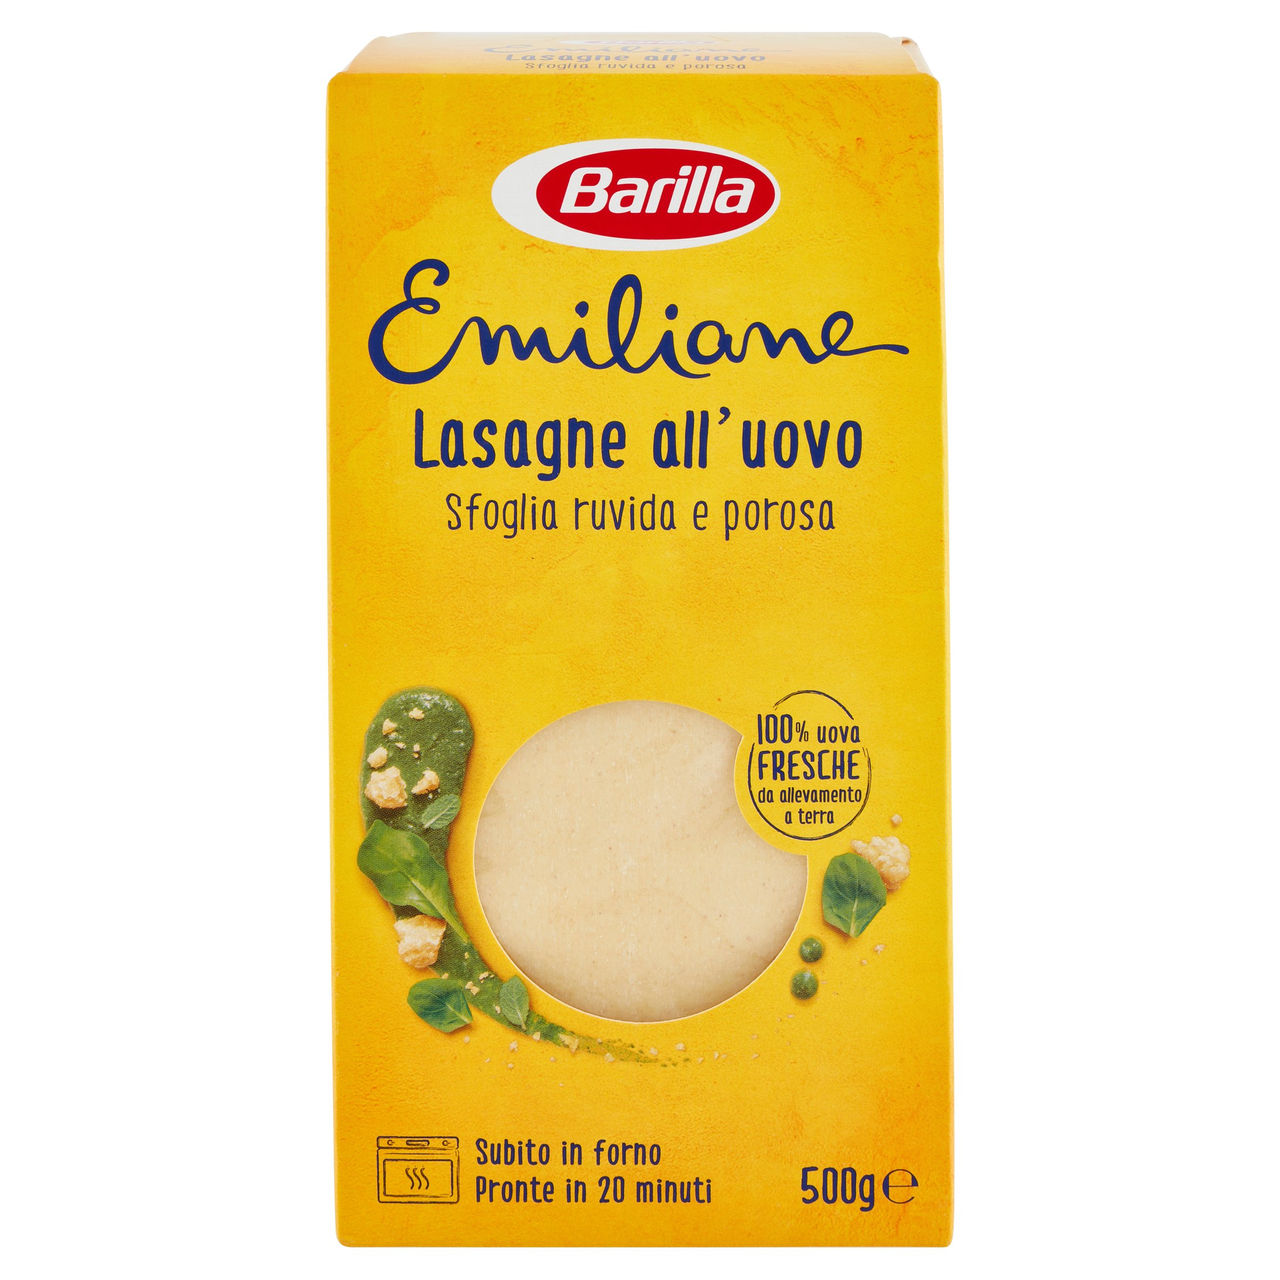 Lasagne Barilla Emiliane Pasta all'uovo online